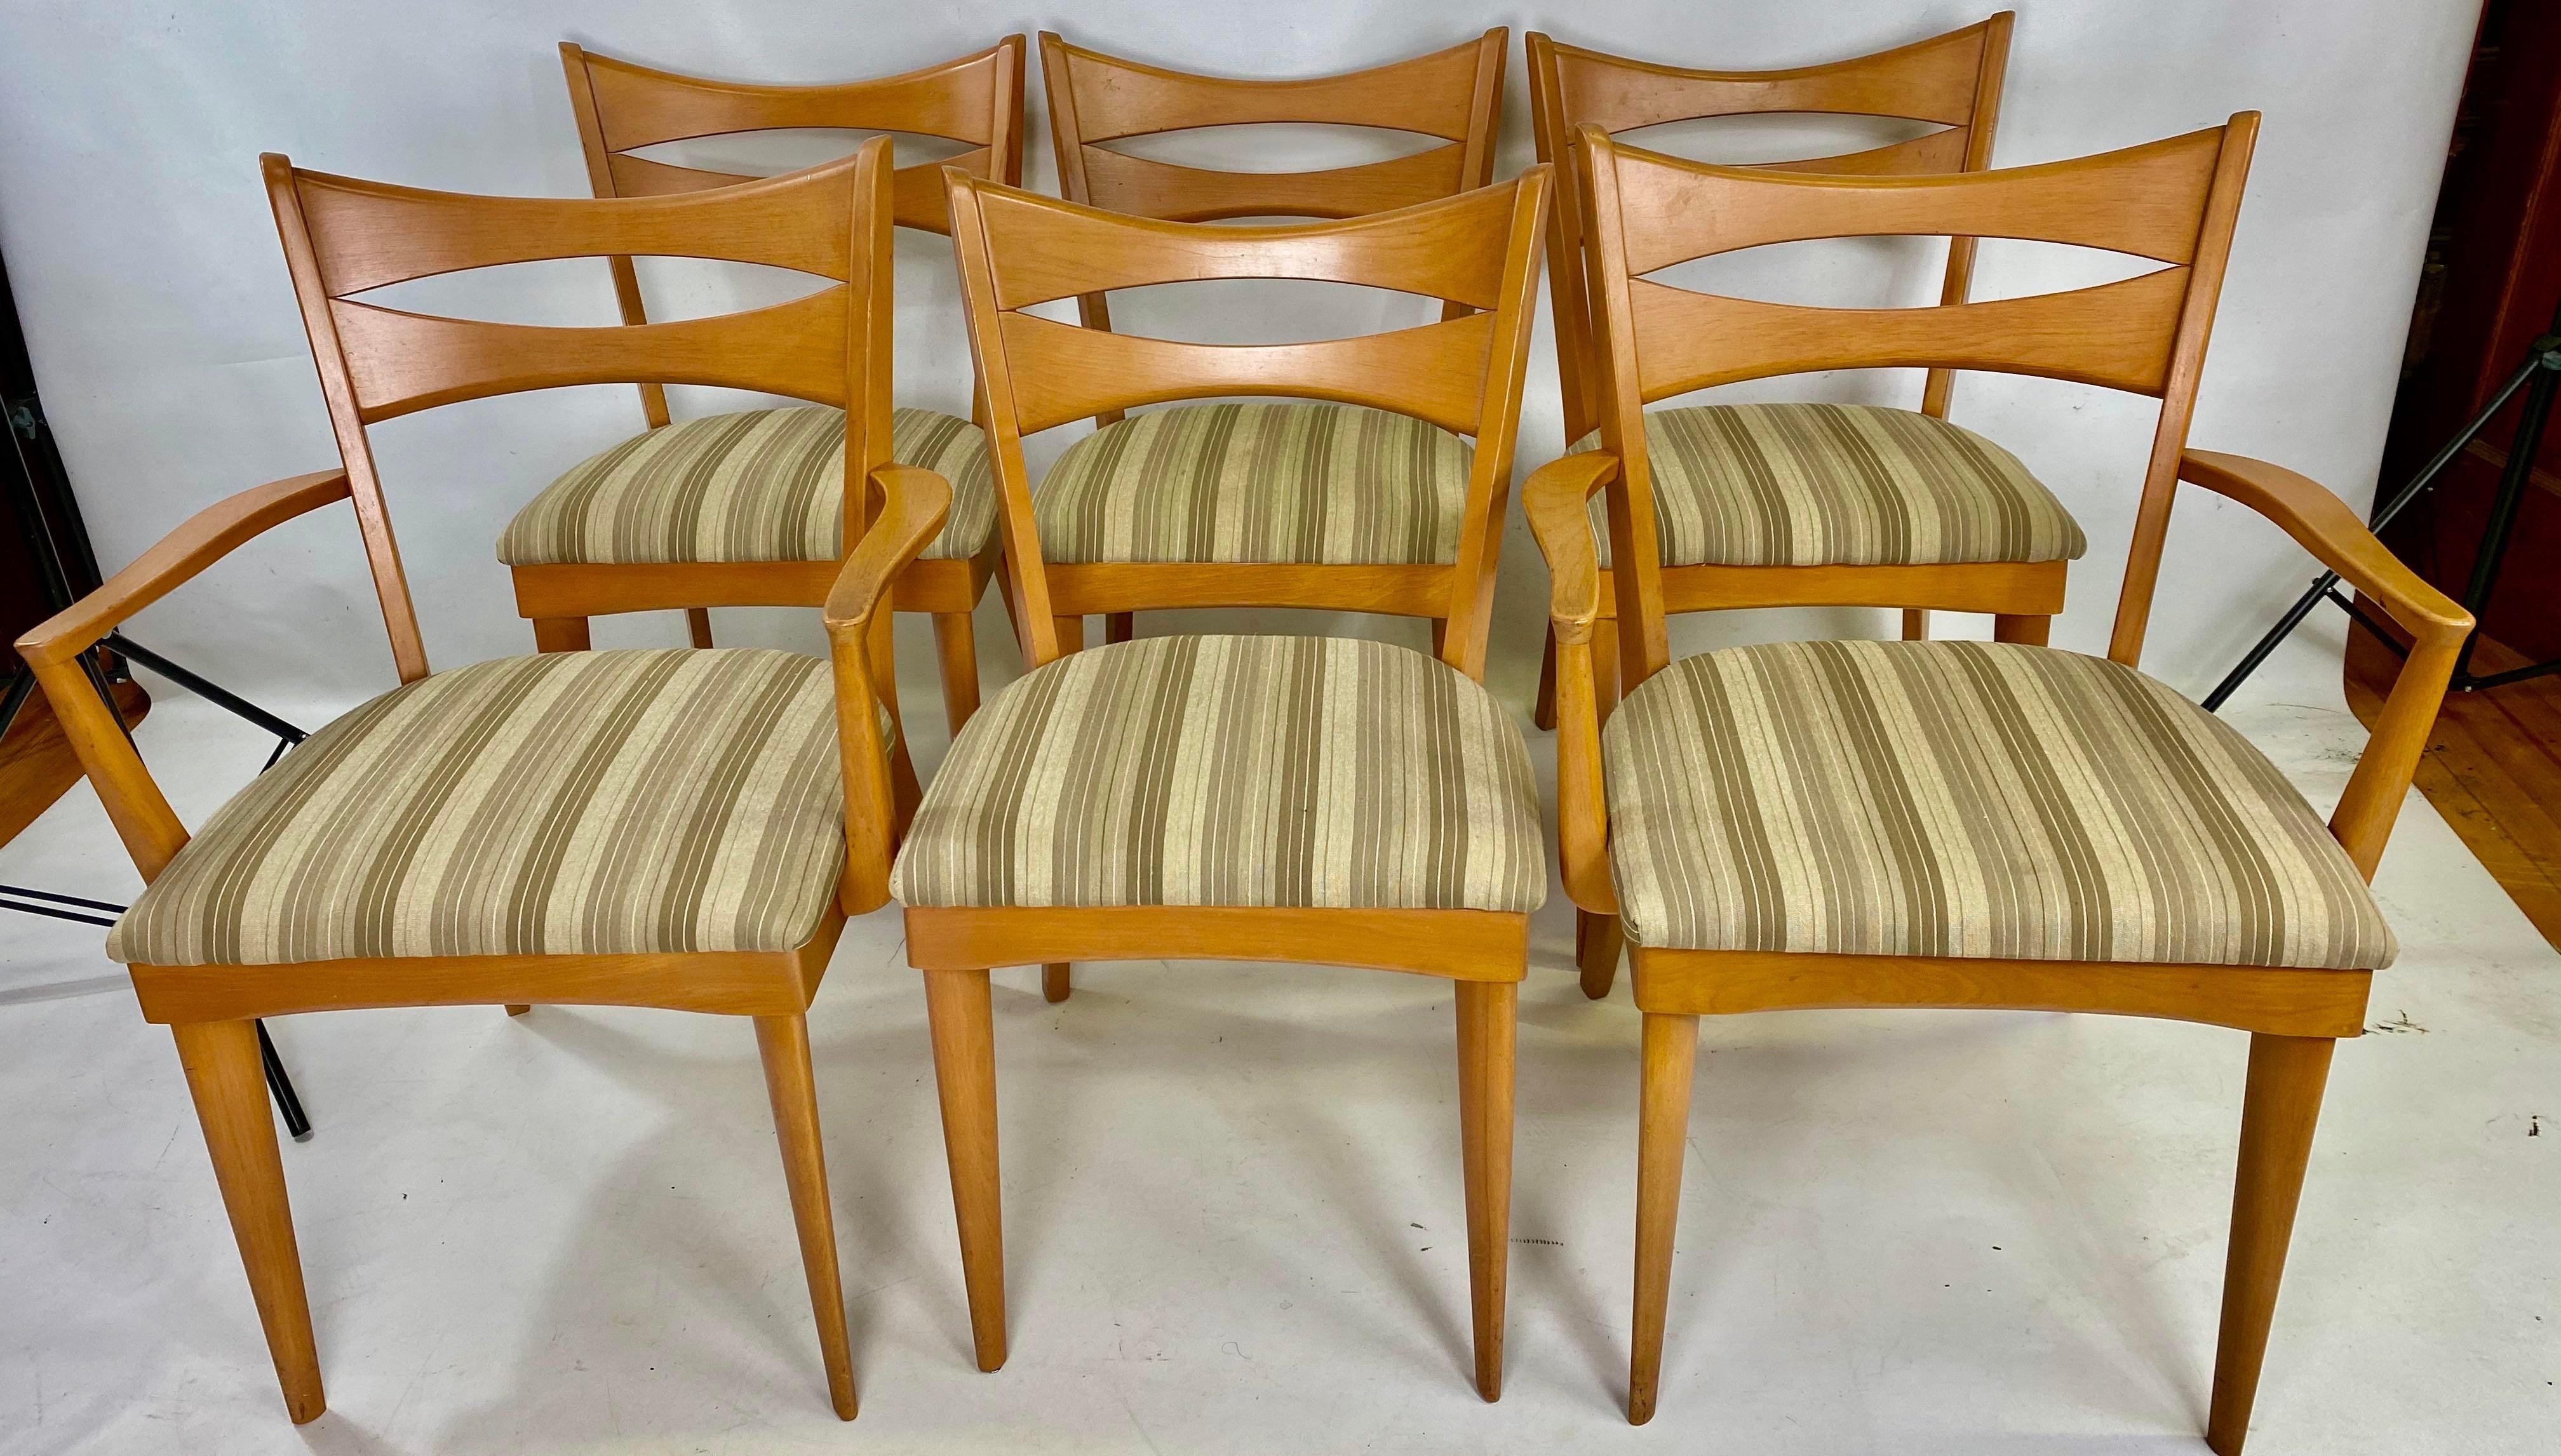 Mid-Century Modern Heywood Wakefield wishbone dining chairs - set of 6.